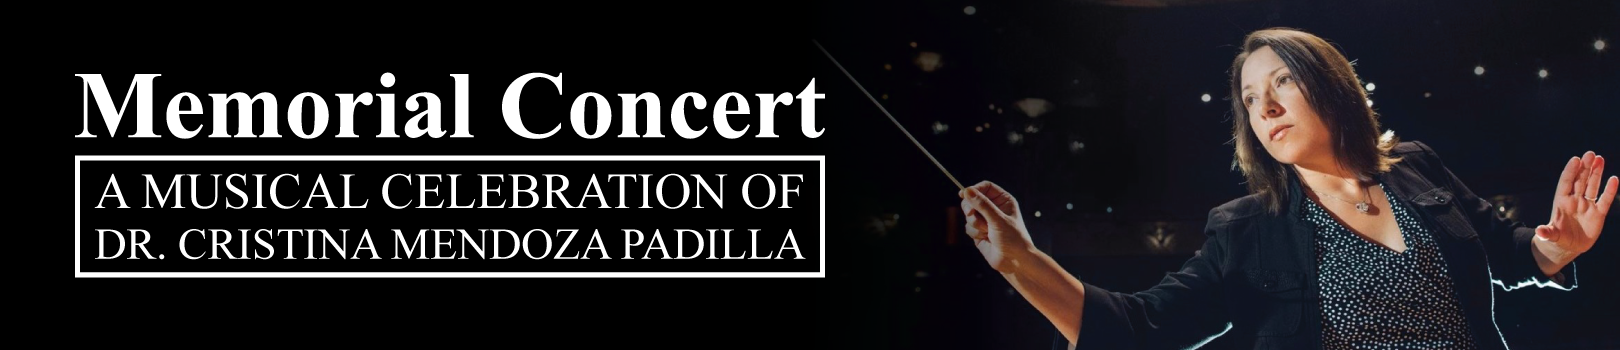 Memorial Concert, A Musical Celebration of Dr. Cristina Mendoza Padilla